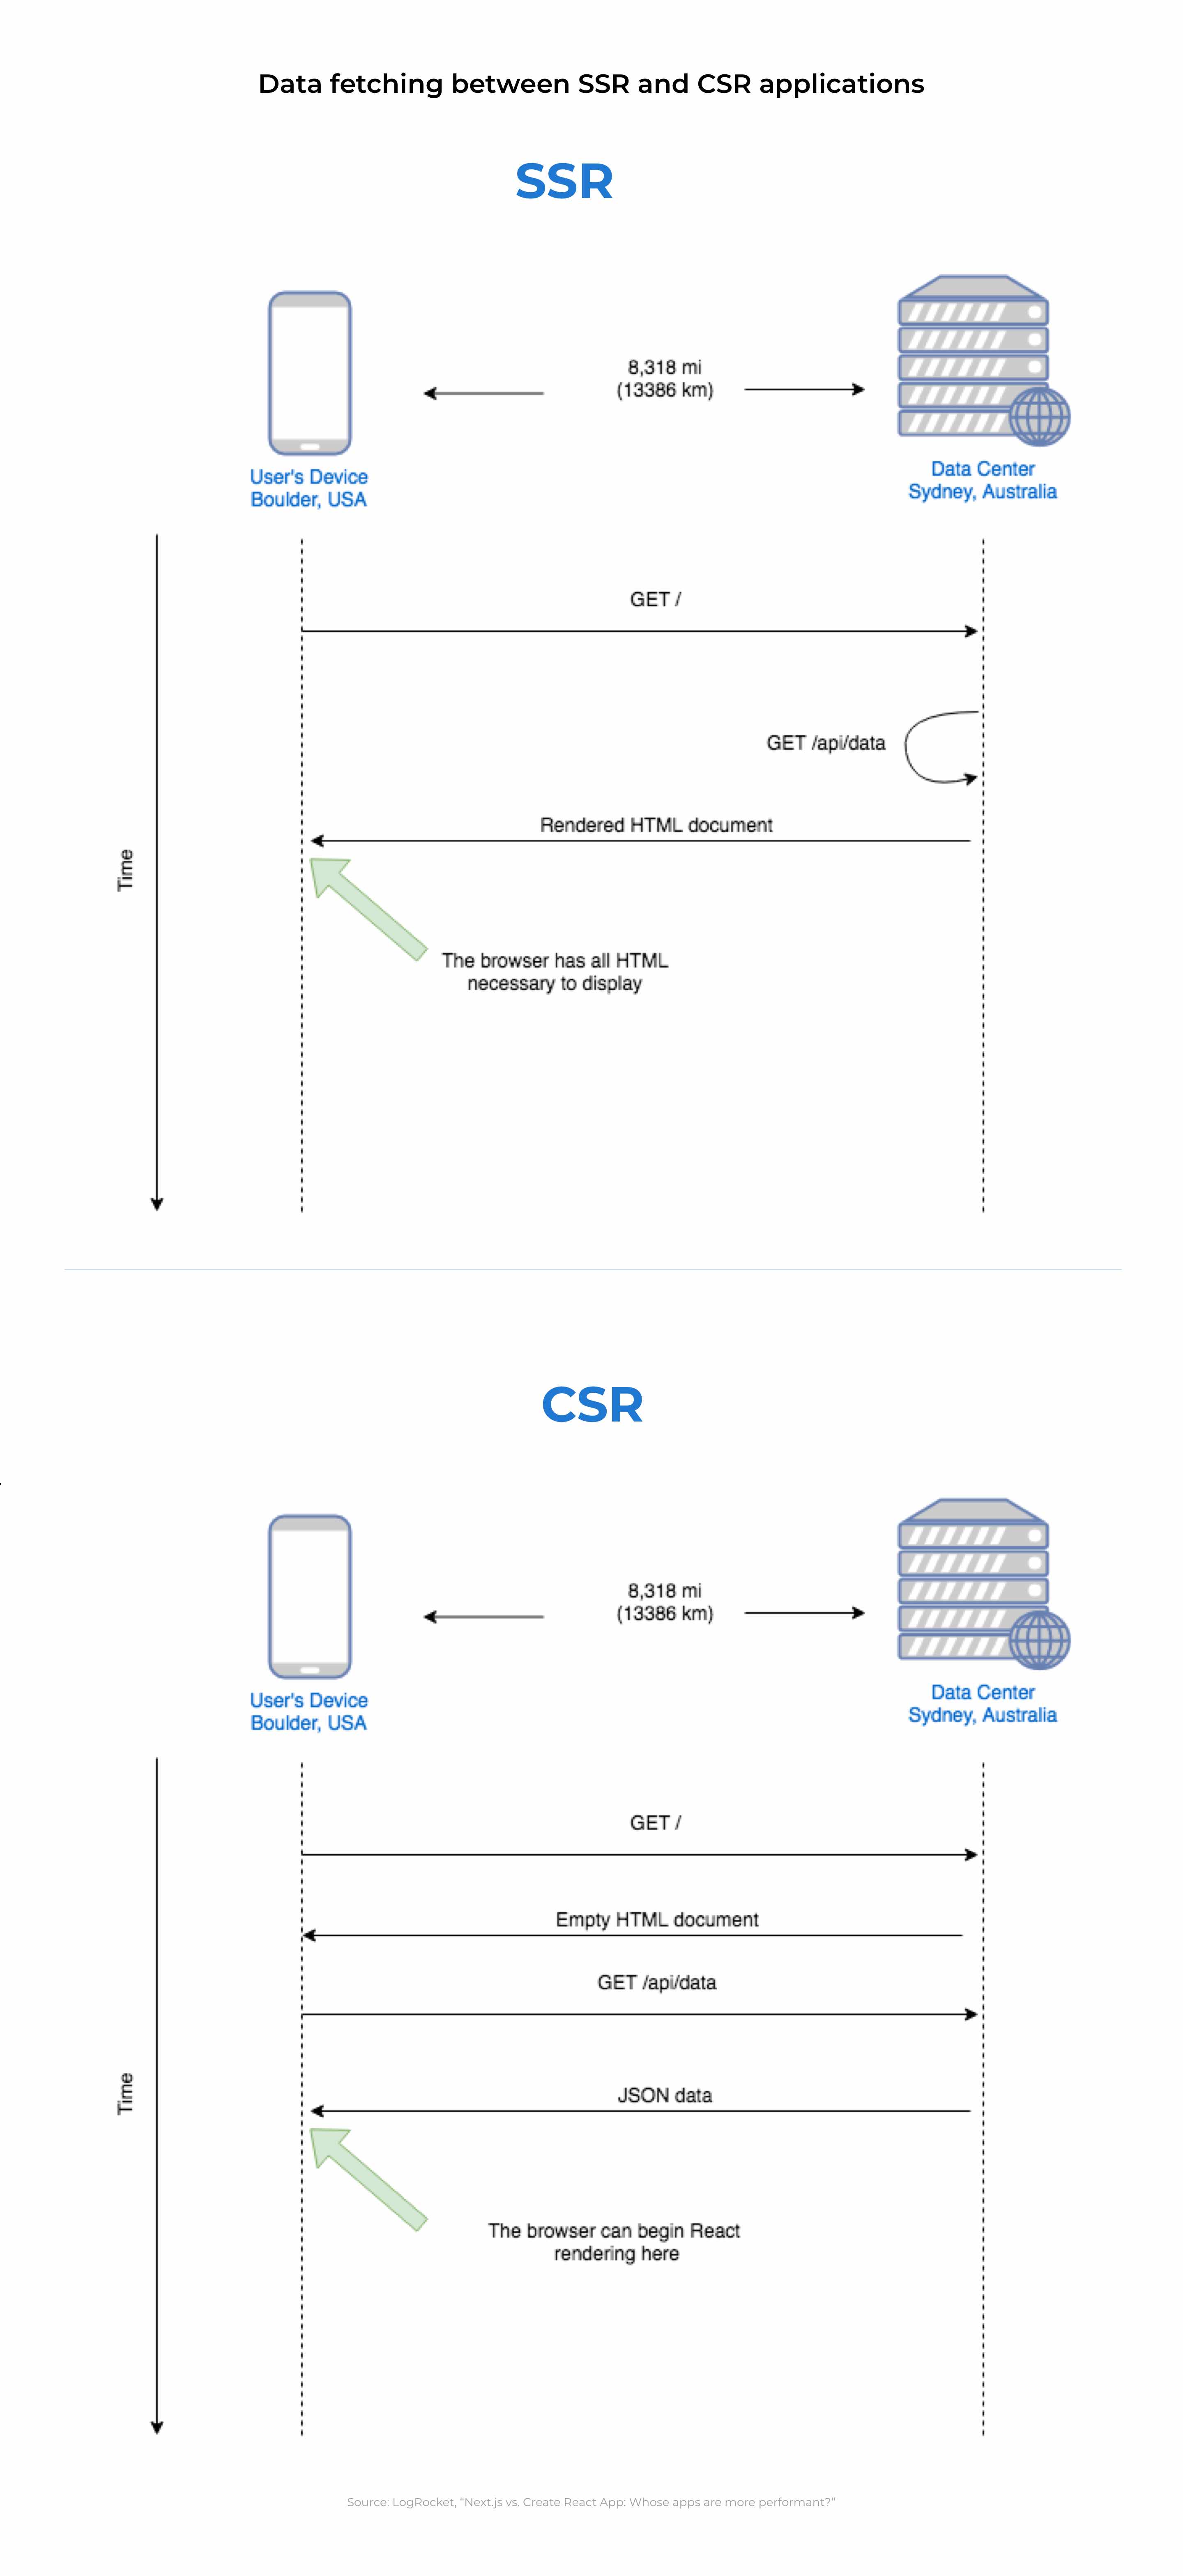 Data fetching between SSR and CSR applications diagram